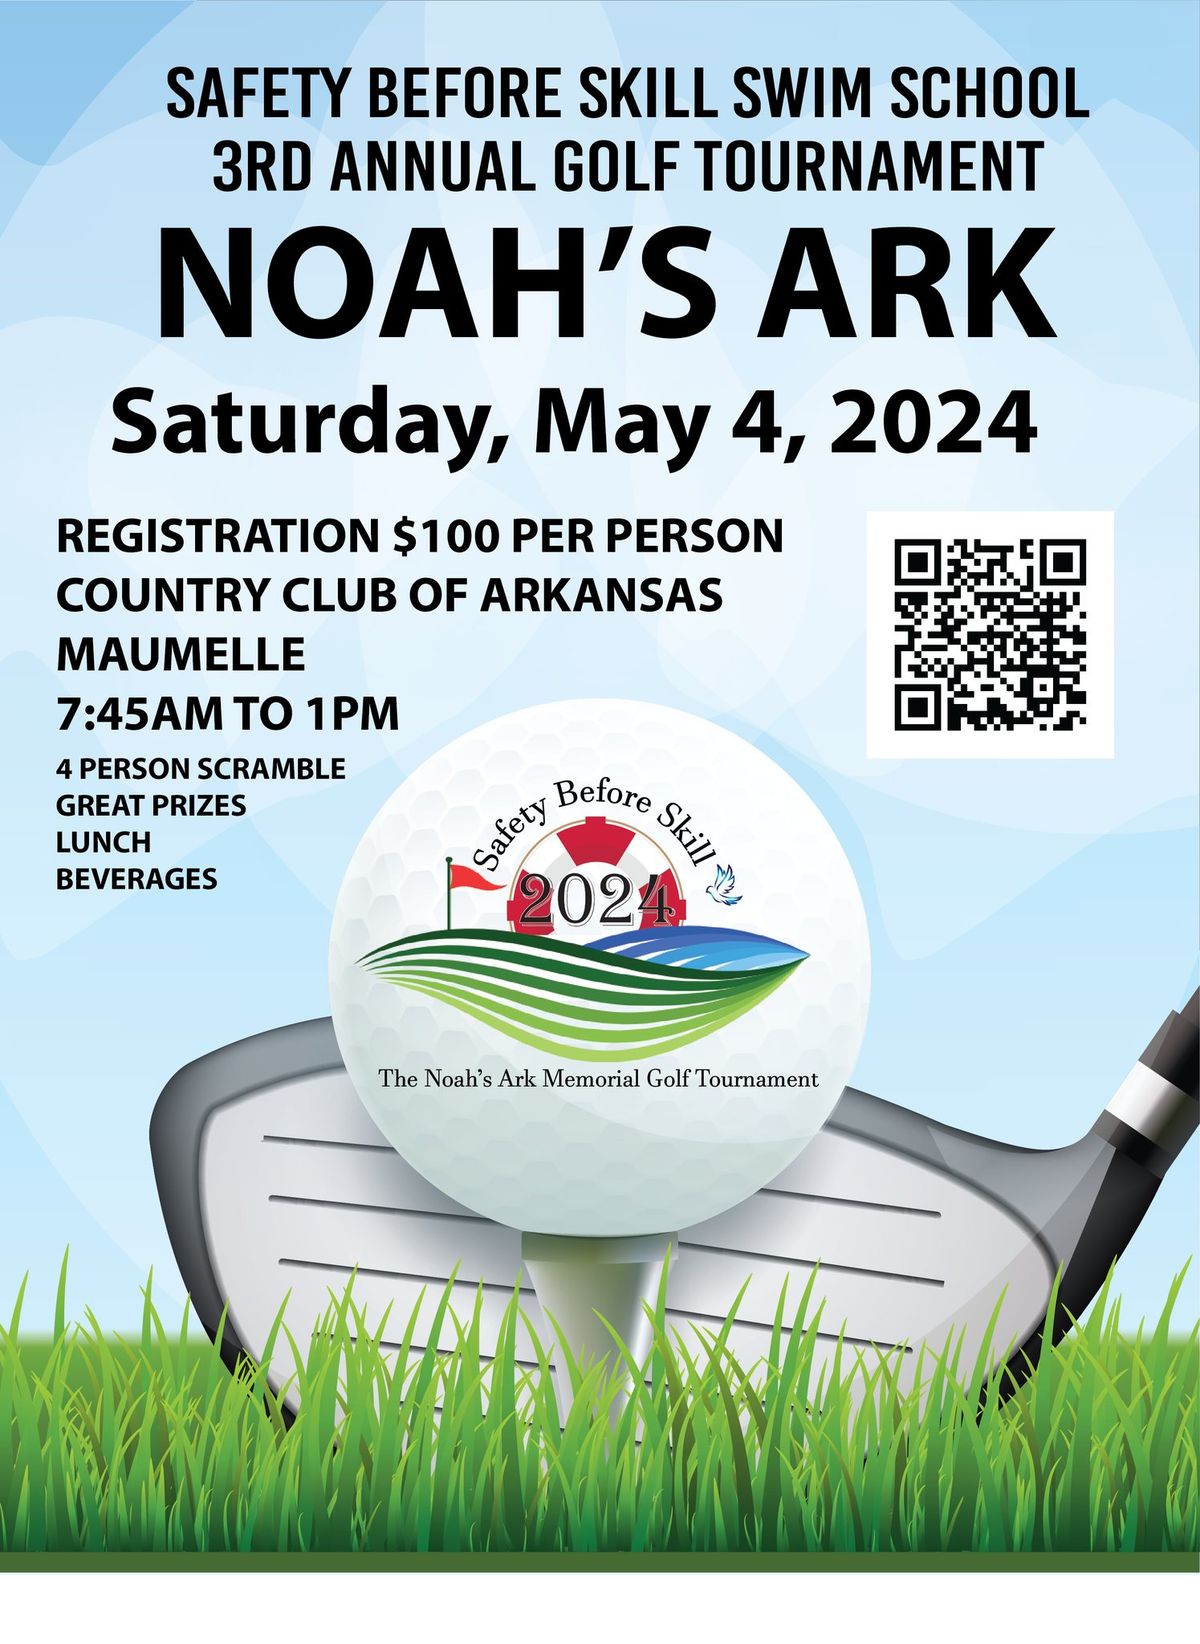 Safety Before Skill Swim School - 3rd Annual Noah's Ark Golf Tournament